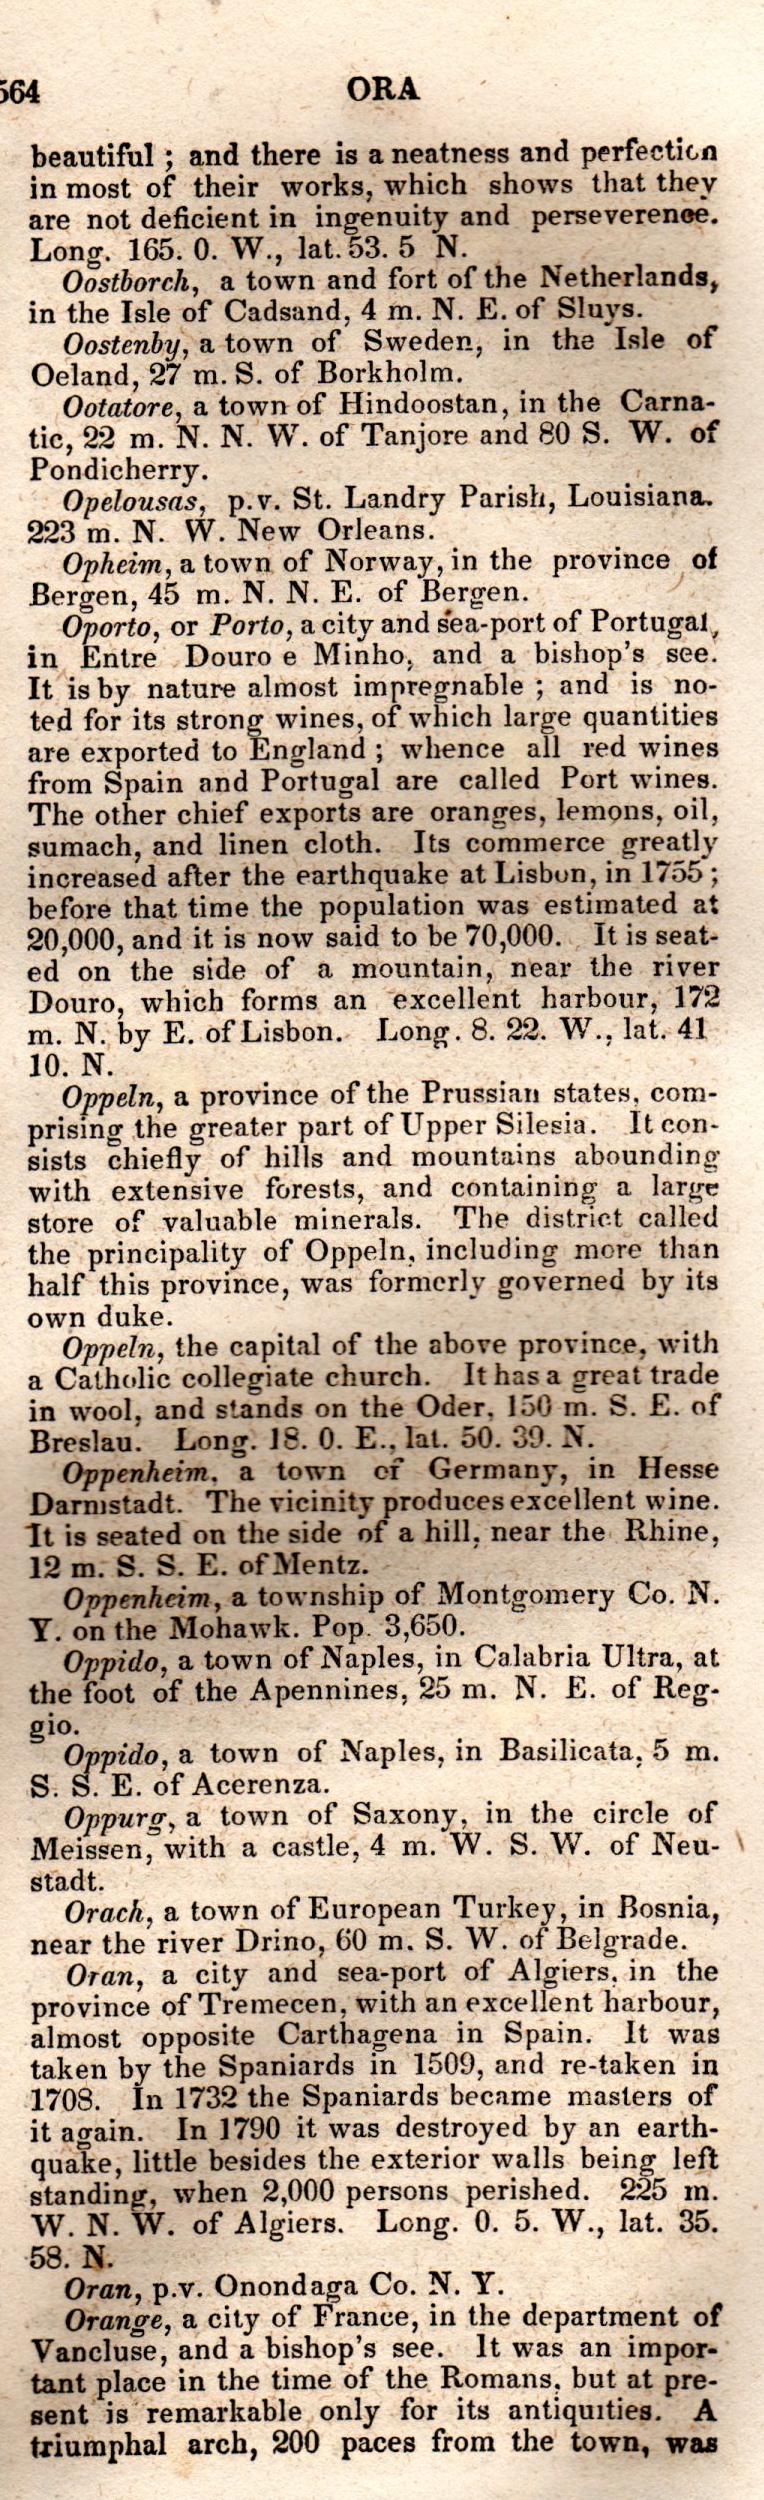 Brookes’ Universal Gazetteer (1850), Page 564 Right Column